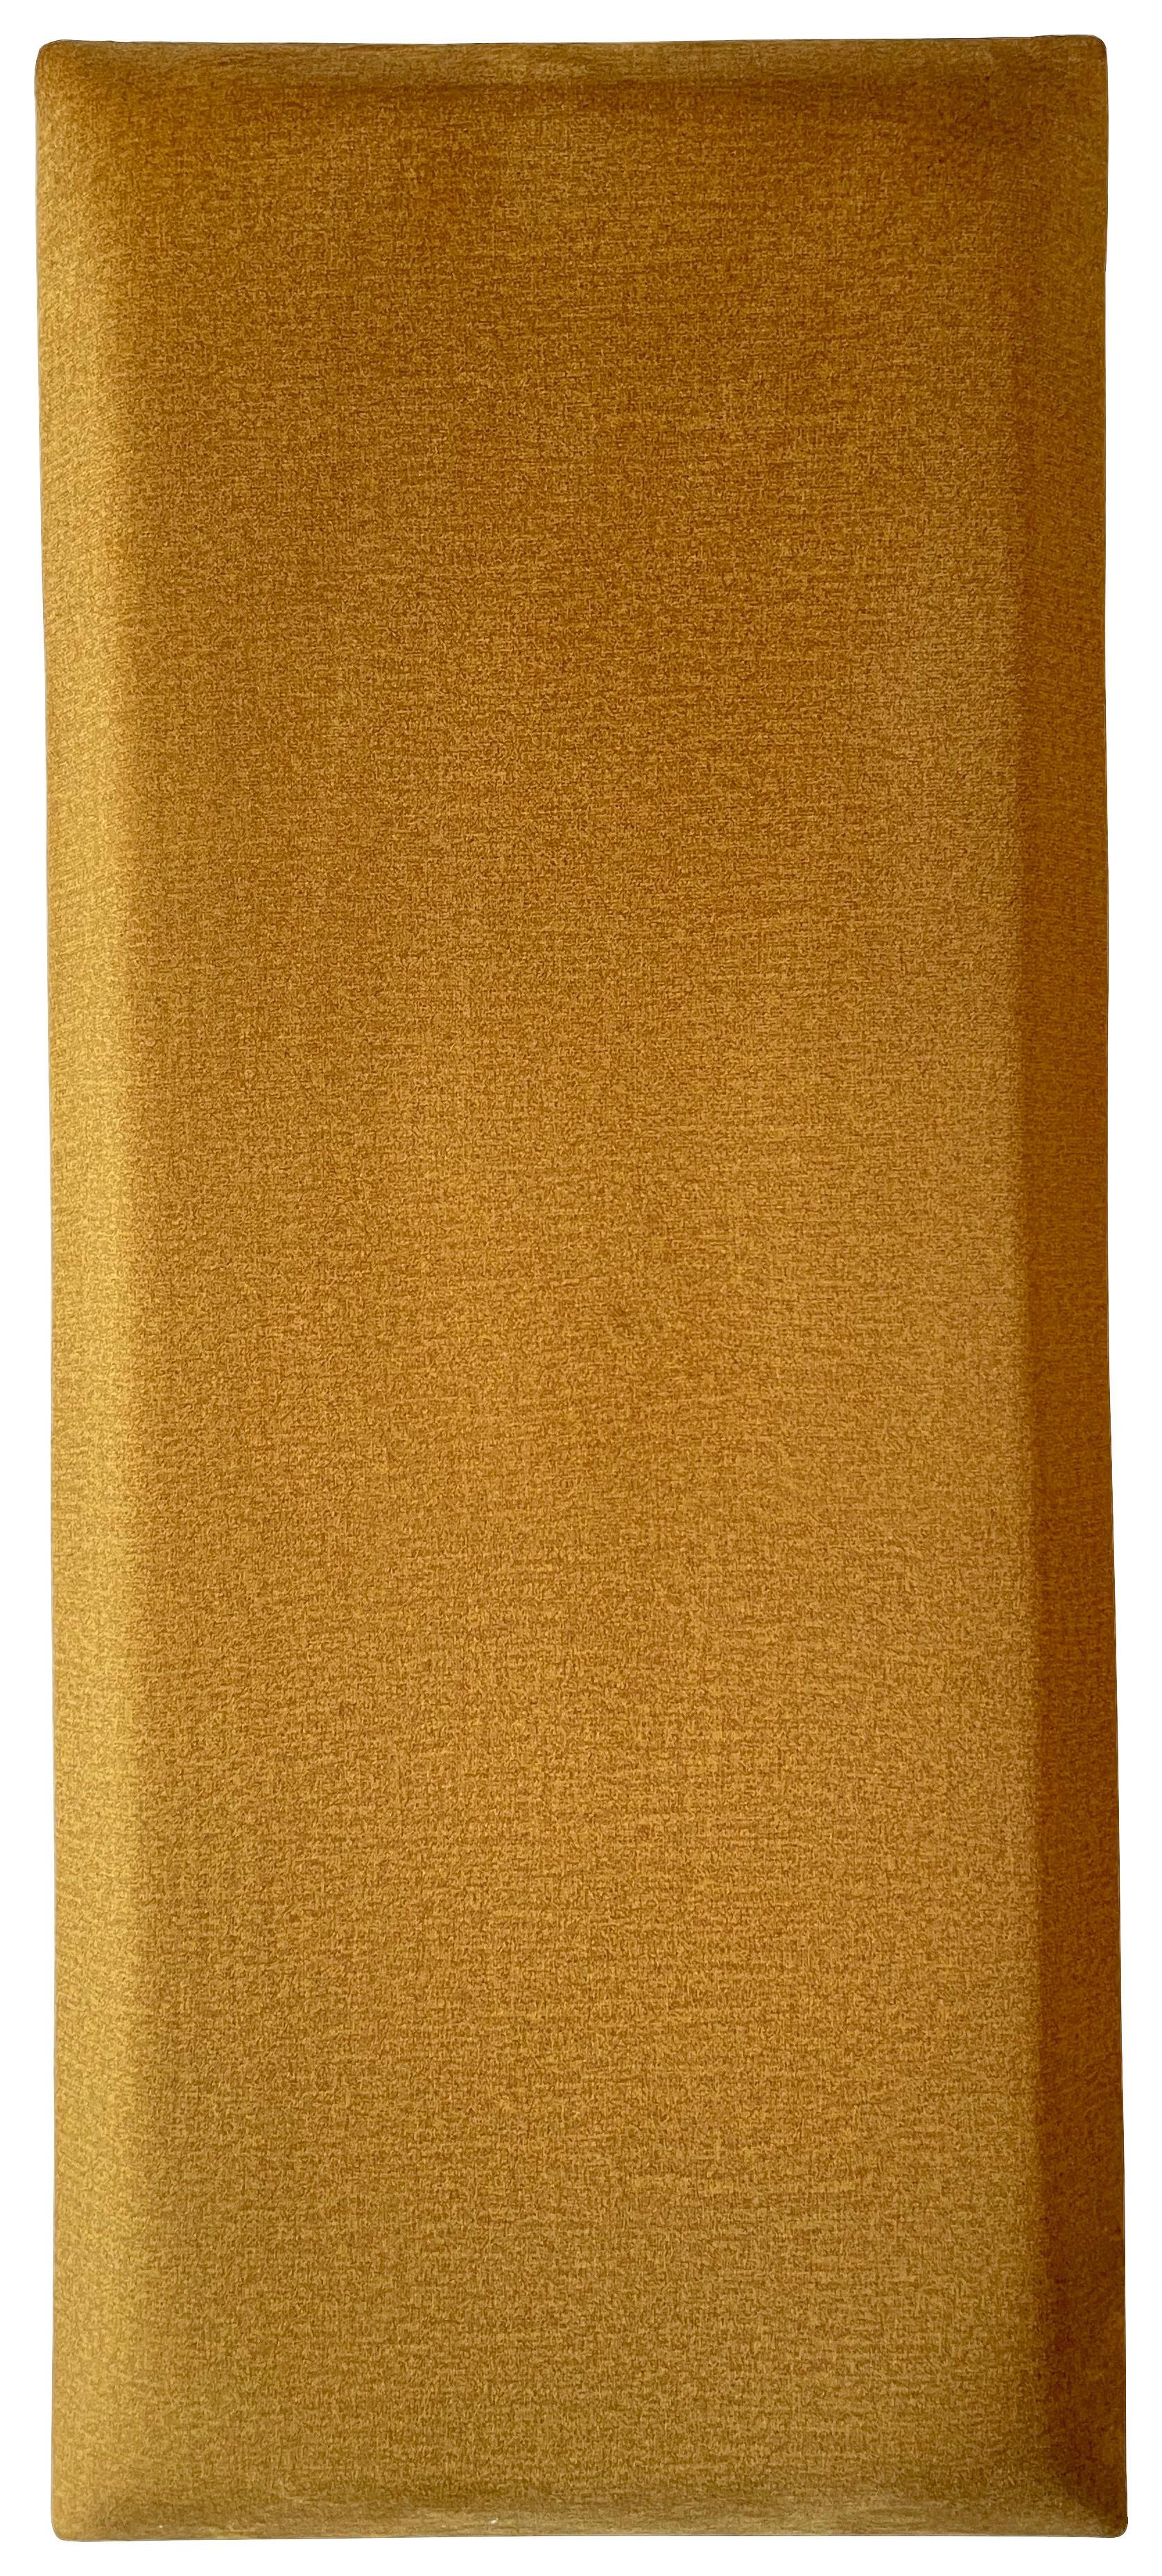 Wandpolster 2er-Set 70x30 cm Rechteckig, Honigfarben - Honig, Basics, Textil (70/30/4cm) - MID.YOU